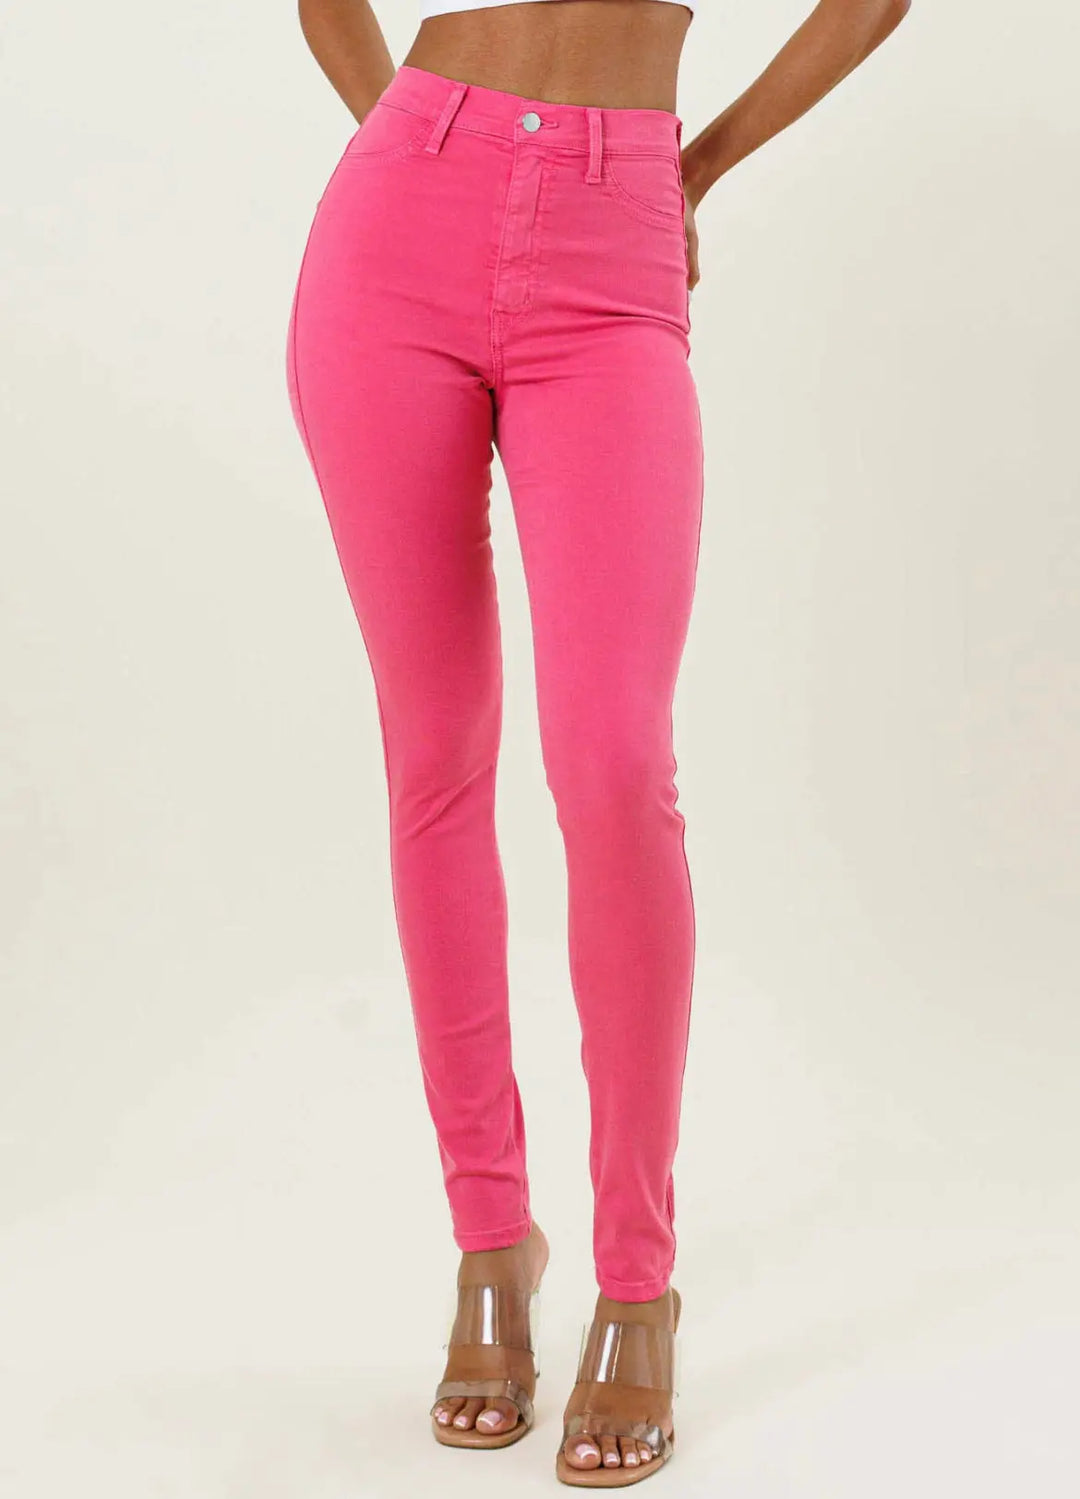 Pretty & Pink Jeans - SurgeStyle Boutique